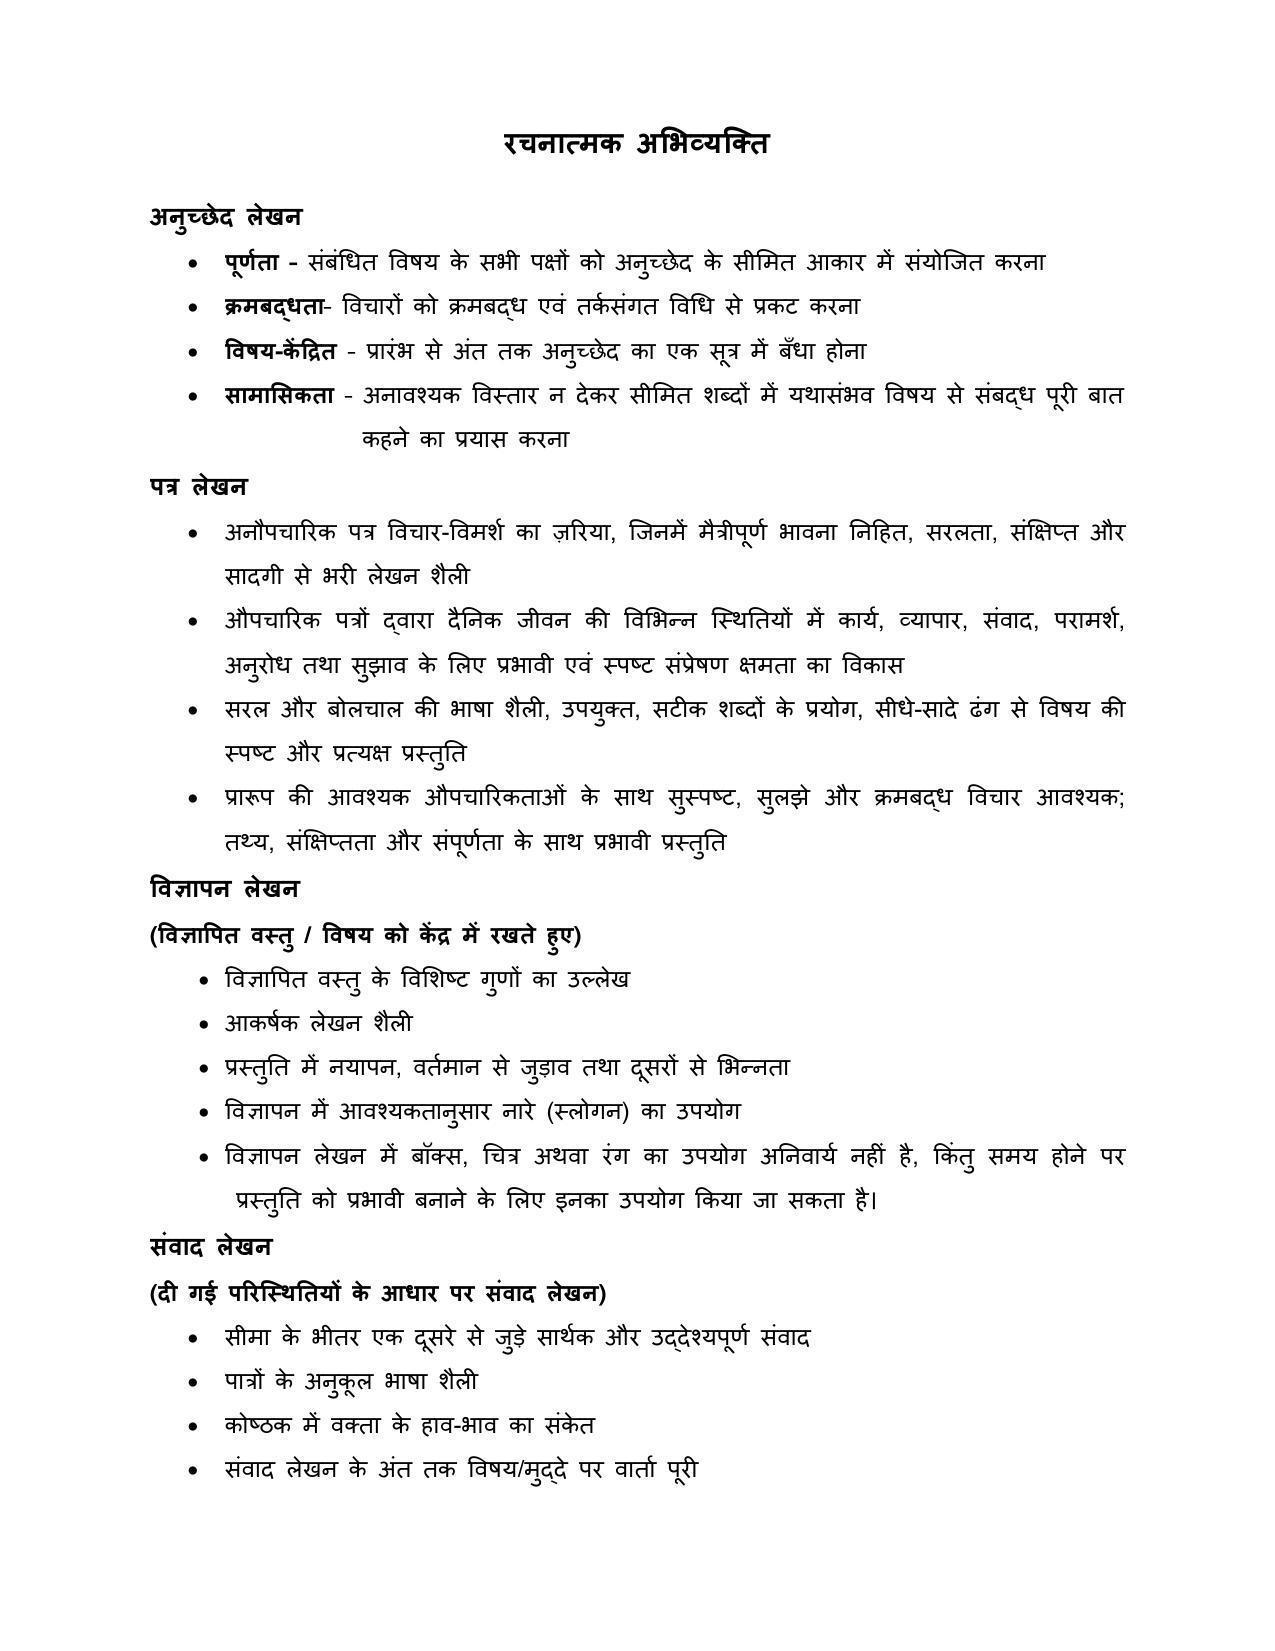 CBSE Class 9 & 10 Syllabus 2022-23 - Hindi course- A - Page 7